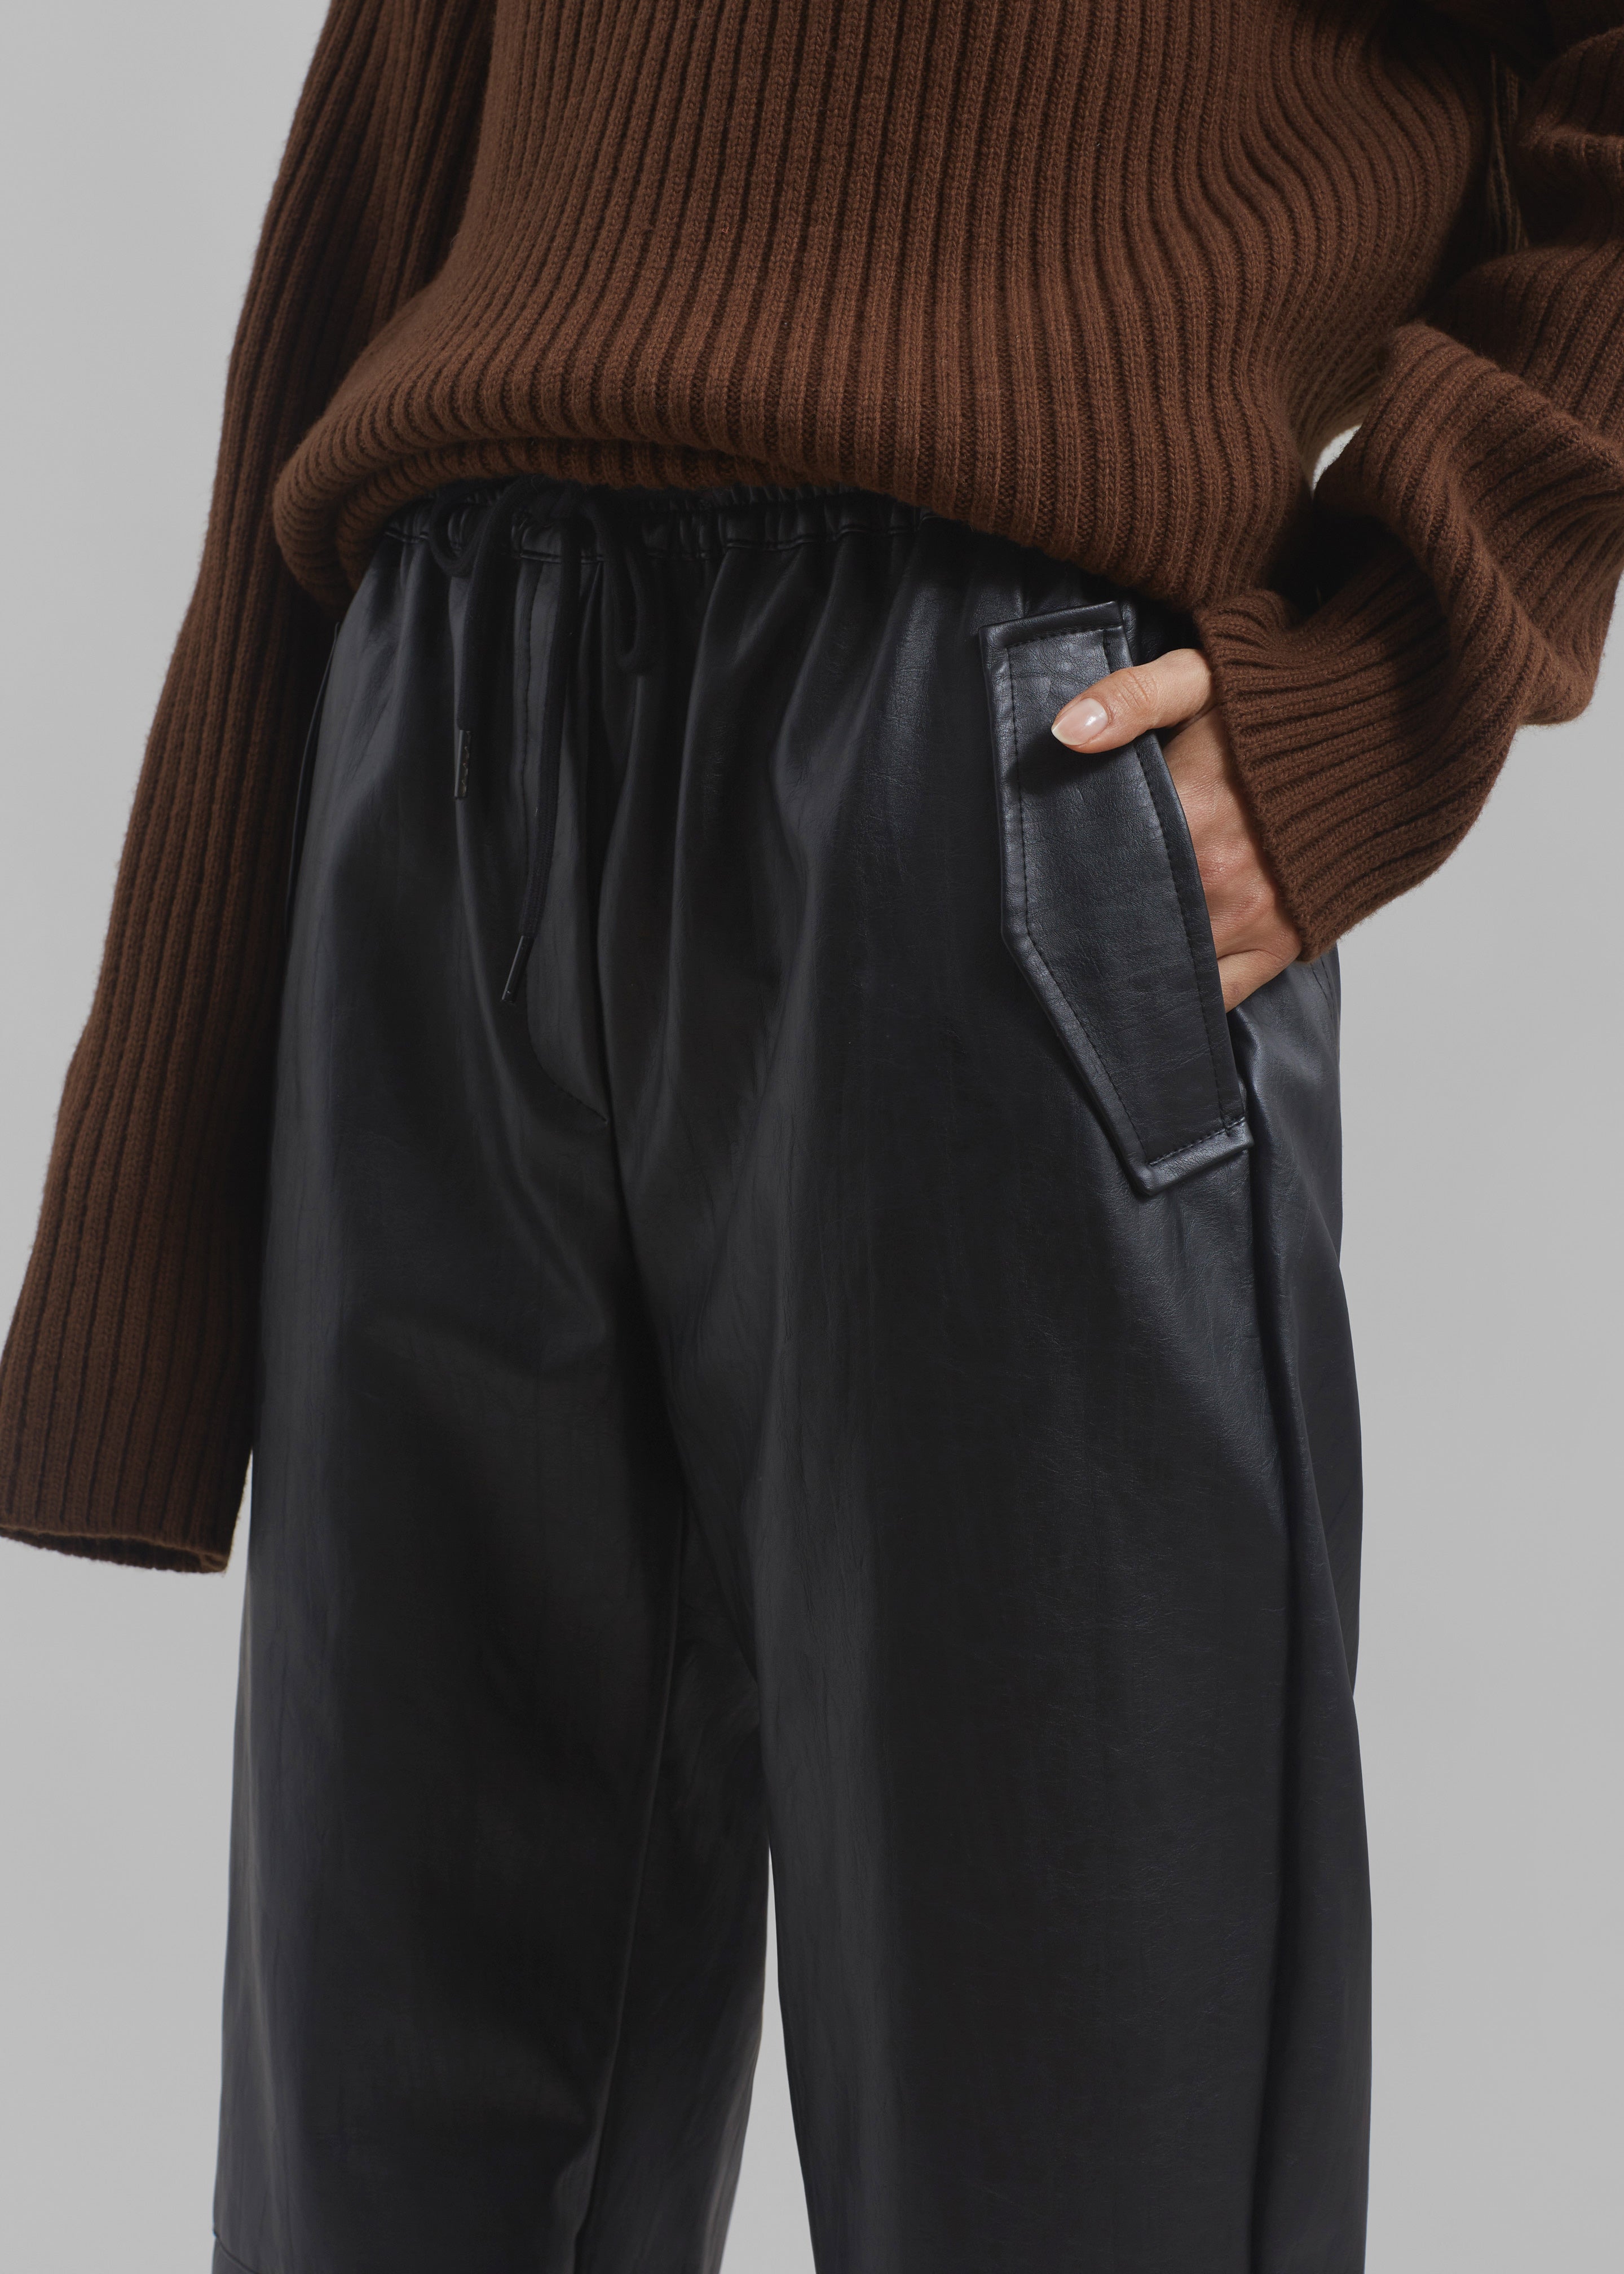 Grayson Faux Leather Pants - Black - 2